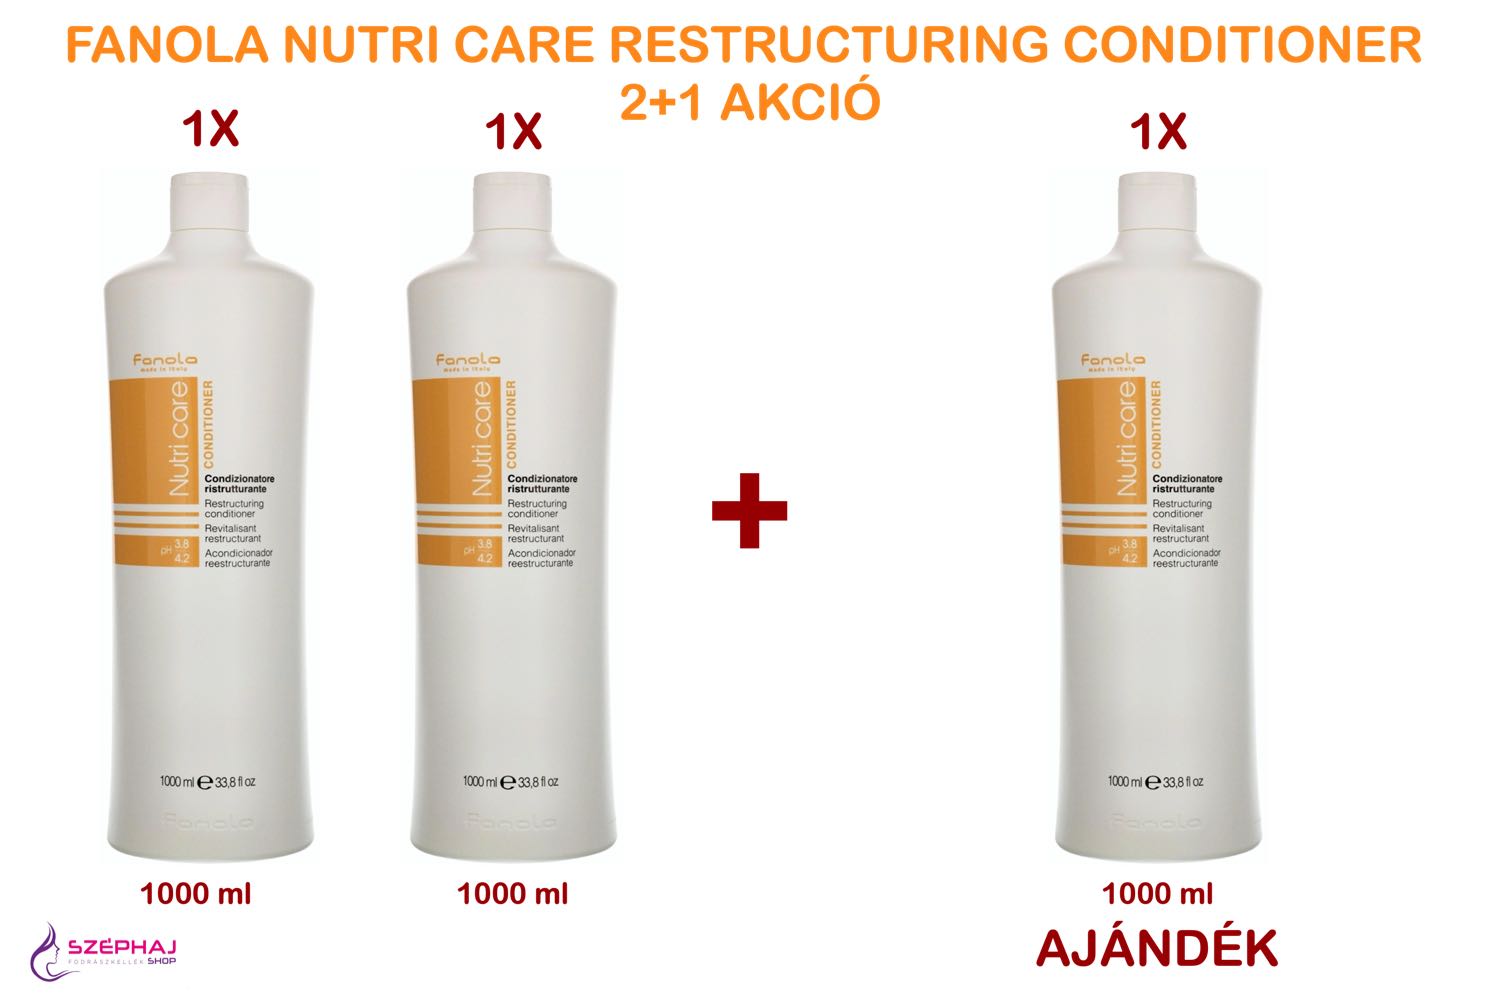 FANOLA Nutri Care Restructuring Conditioner 1000 ml 2+1 AKCIÓ